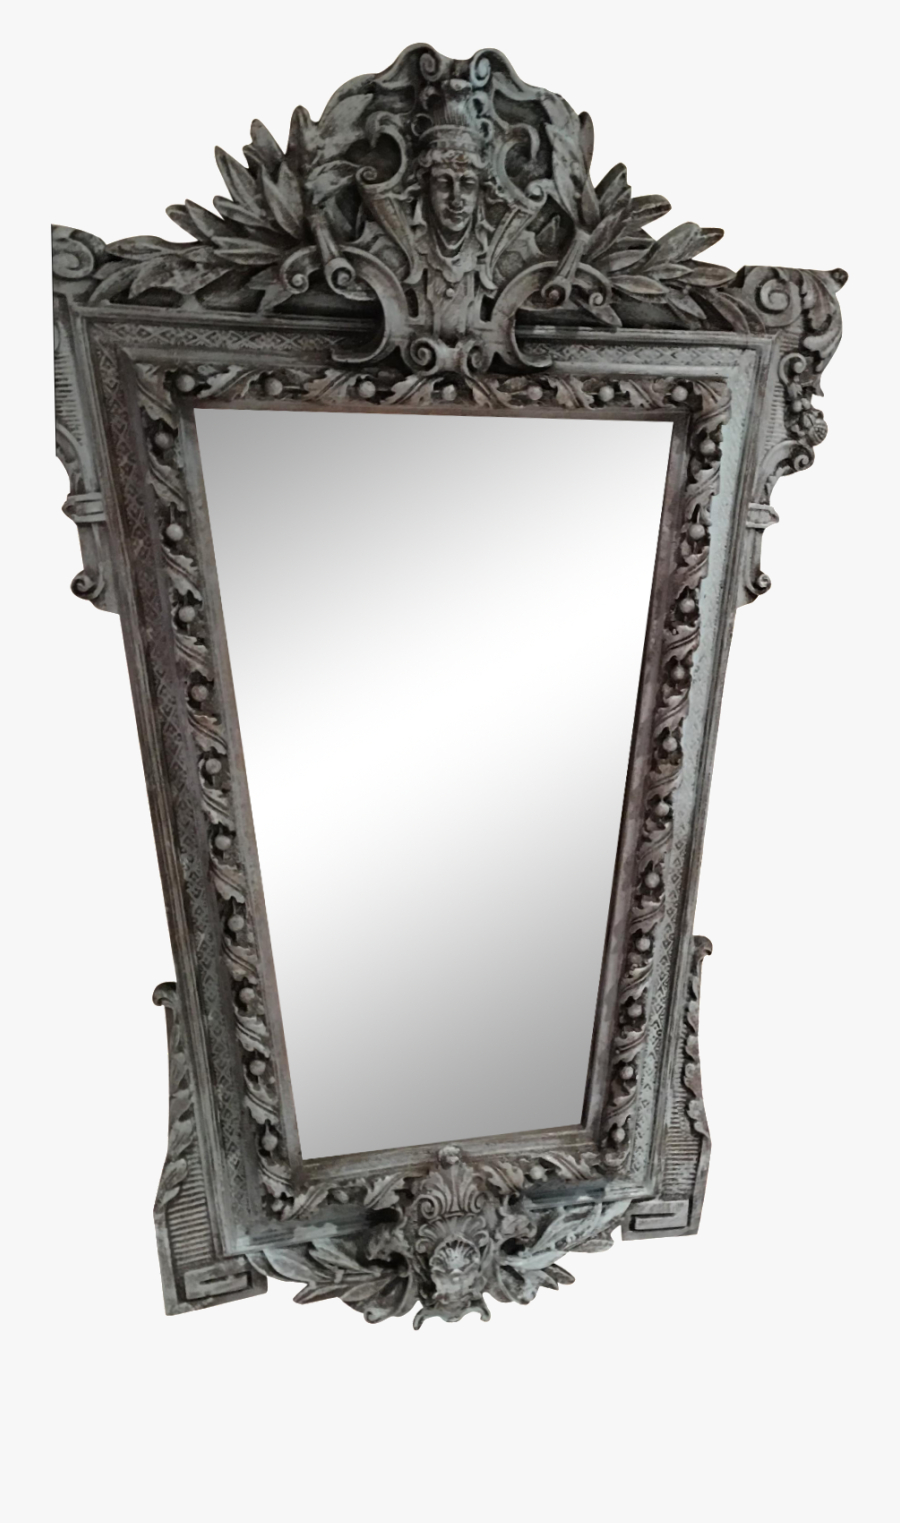 Free Download Vintage Mirror Chairish - Ornate Gothic Mirror, Transparent Clipart